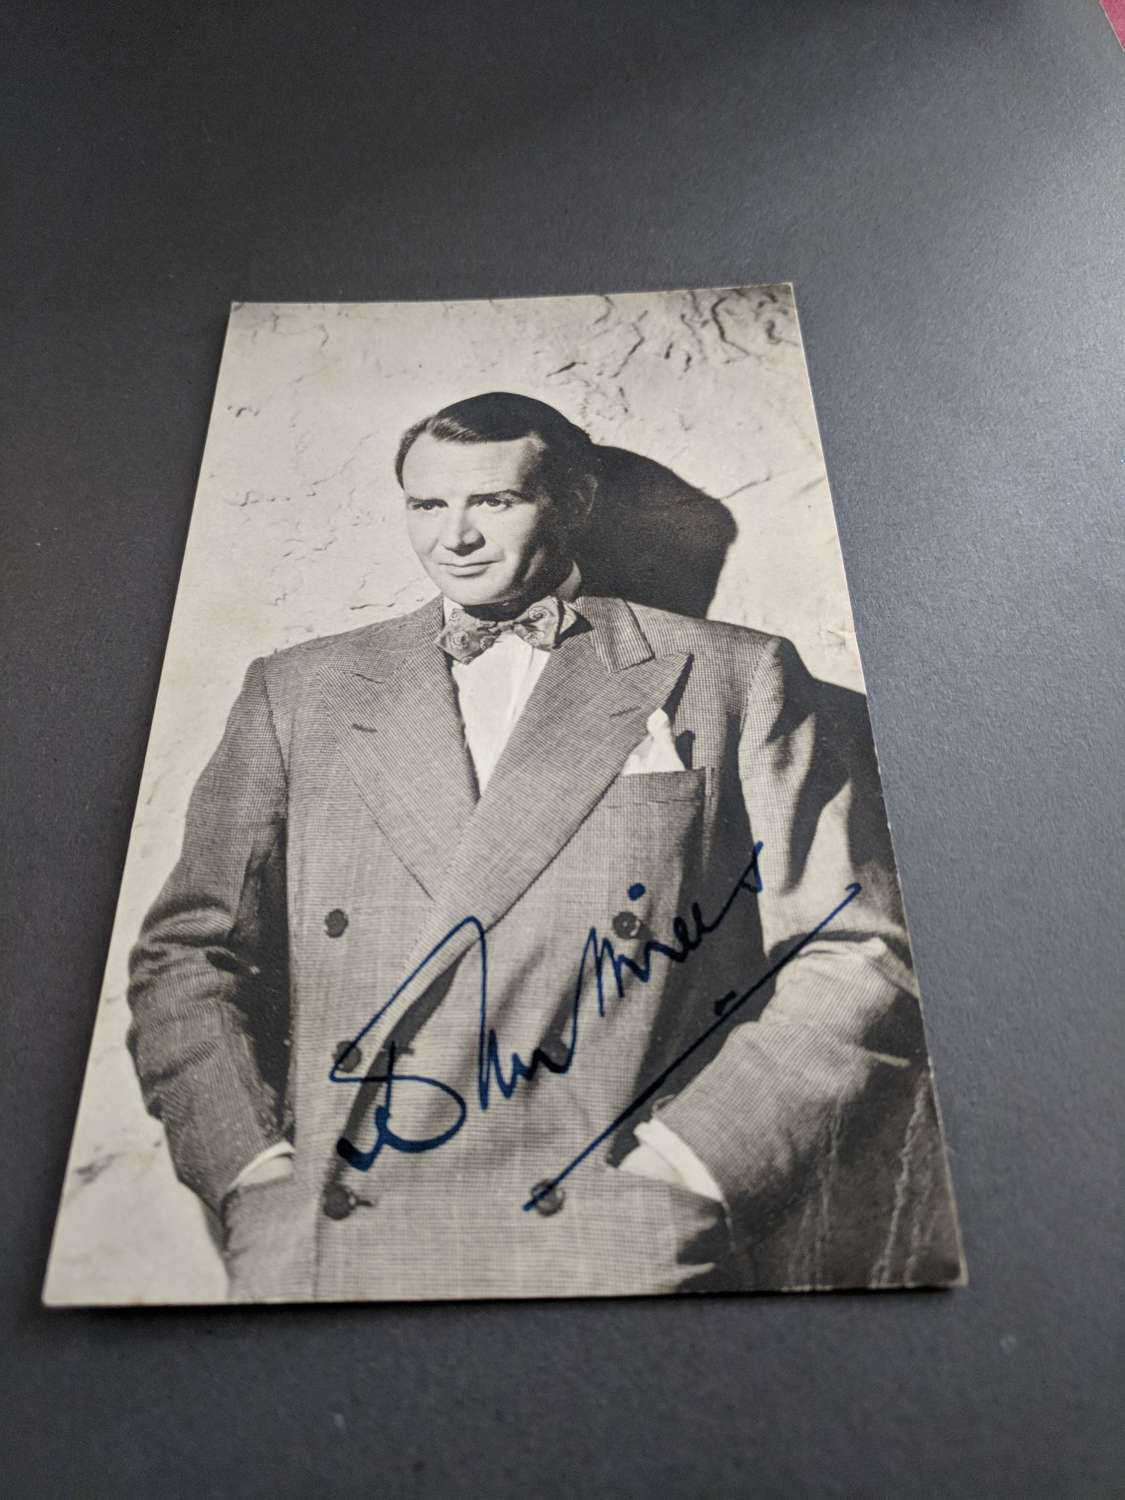 British Actor Sir John Mills Signed Portrait Photograph 1953